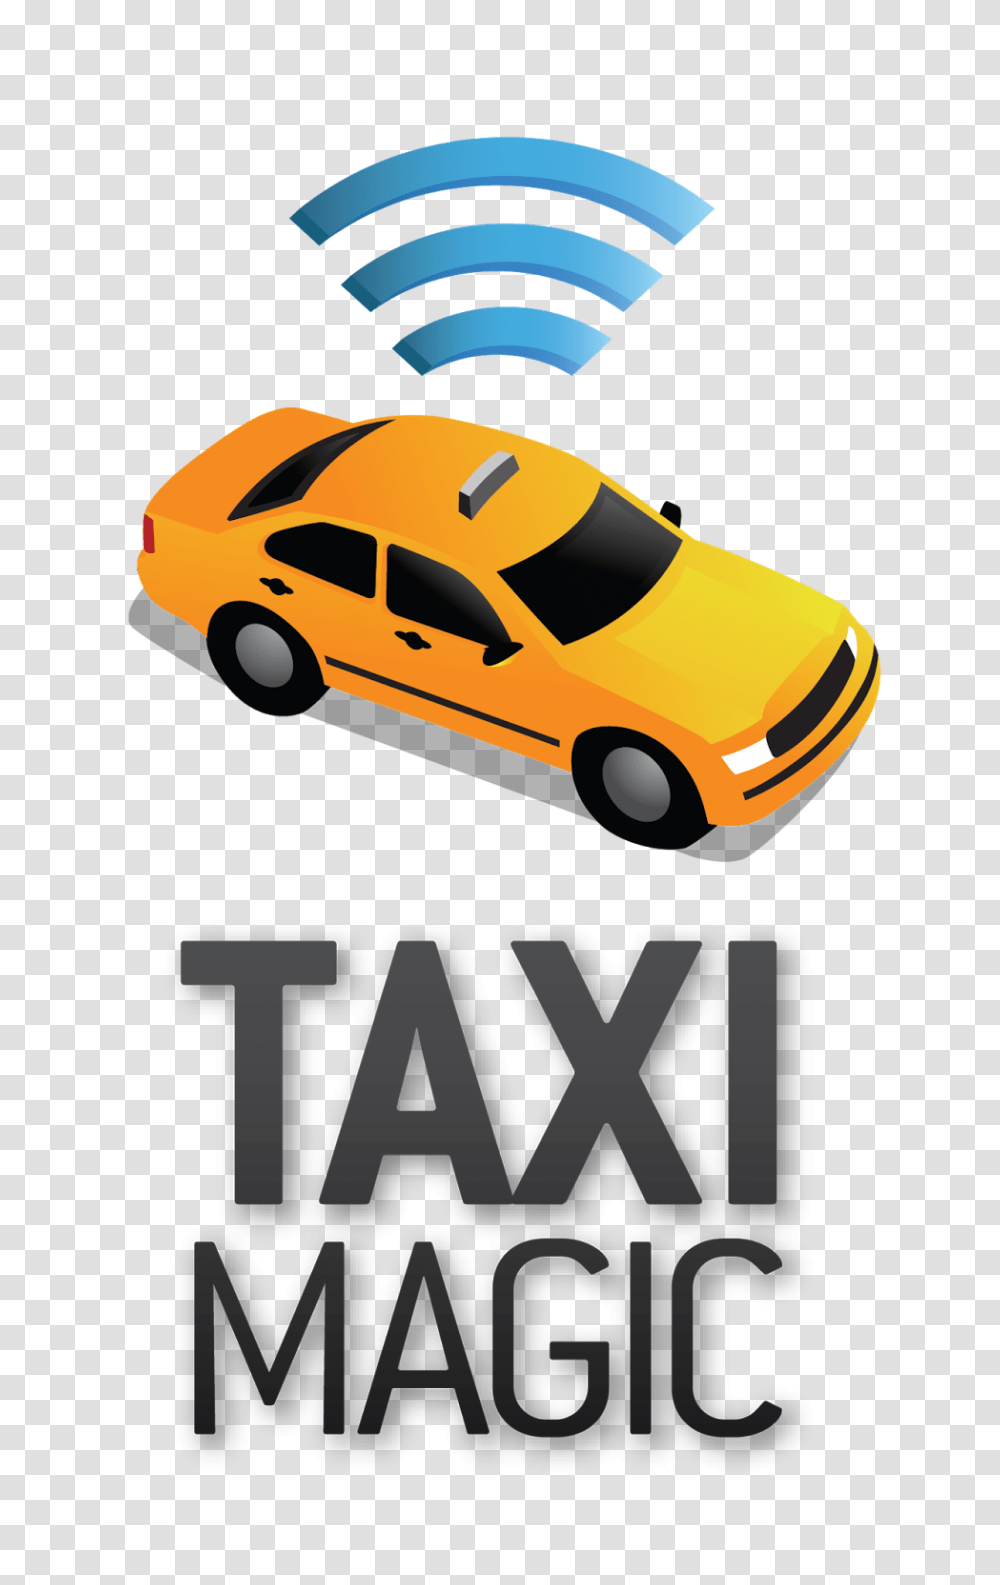 Join The Gossip Taxi Magic Revolutionizing Cab Rides, Car, Vehicle, Transportation, Automobile Transparent Png